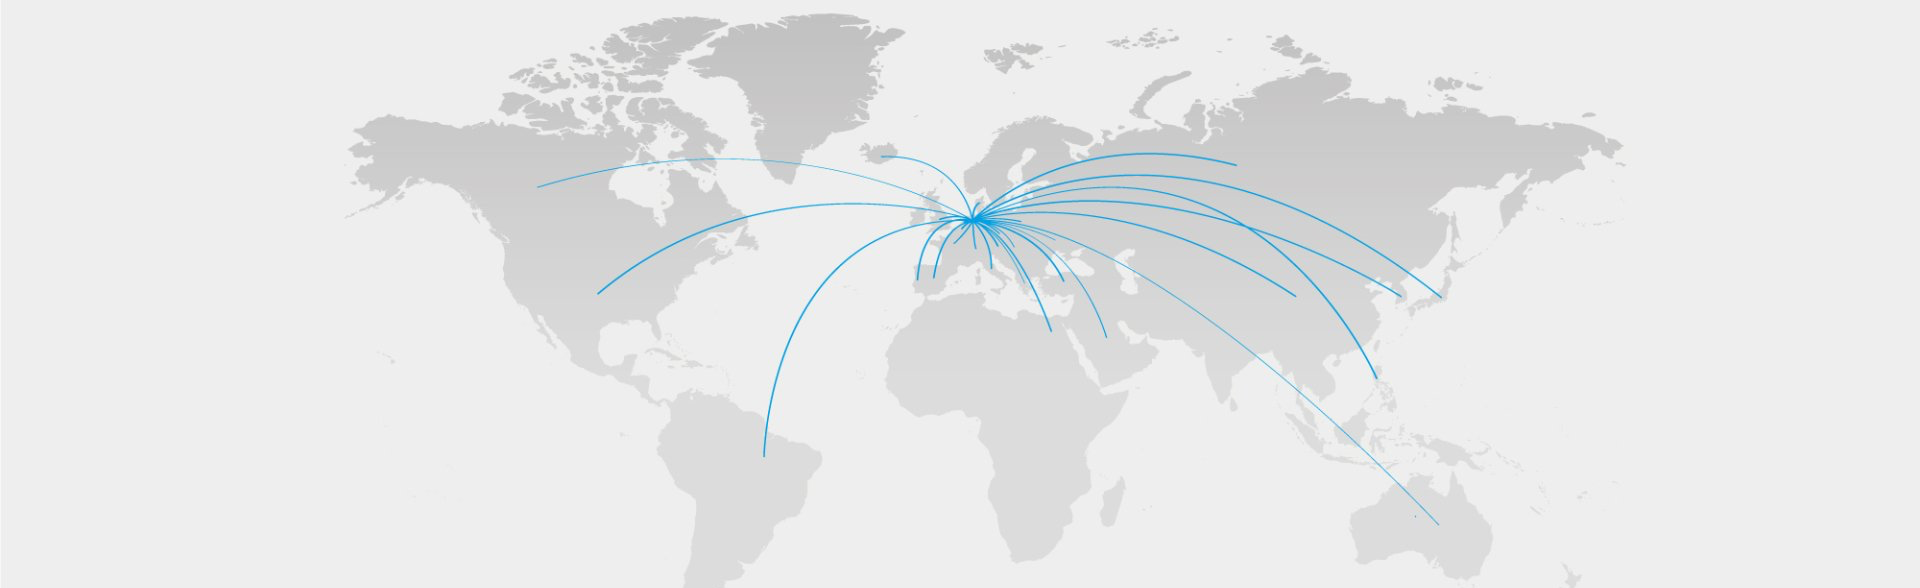 Weltkarte Auslieferung EMS FVK-Profile